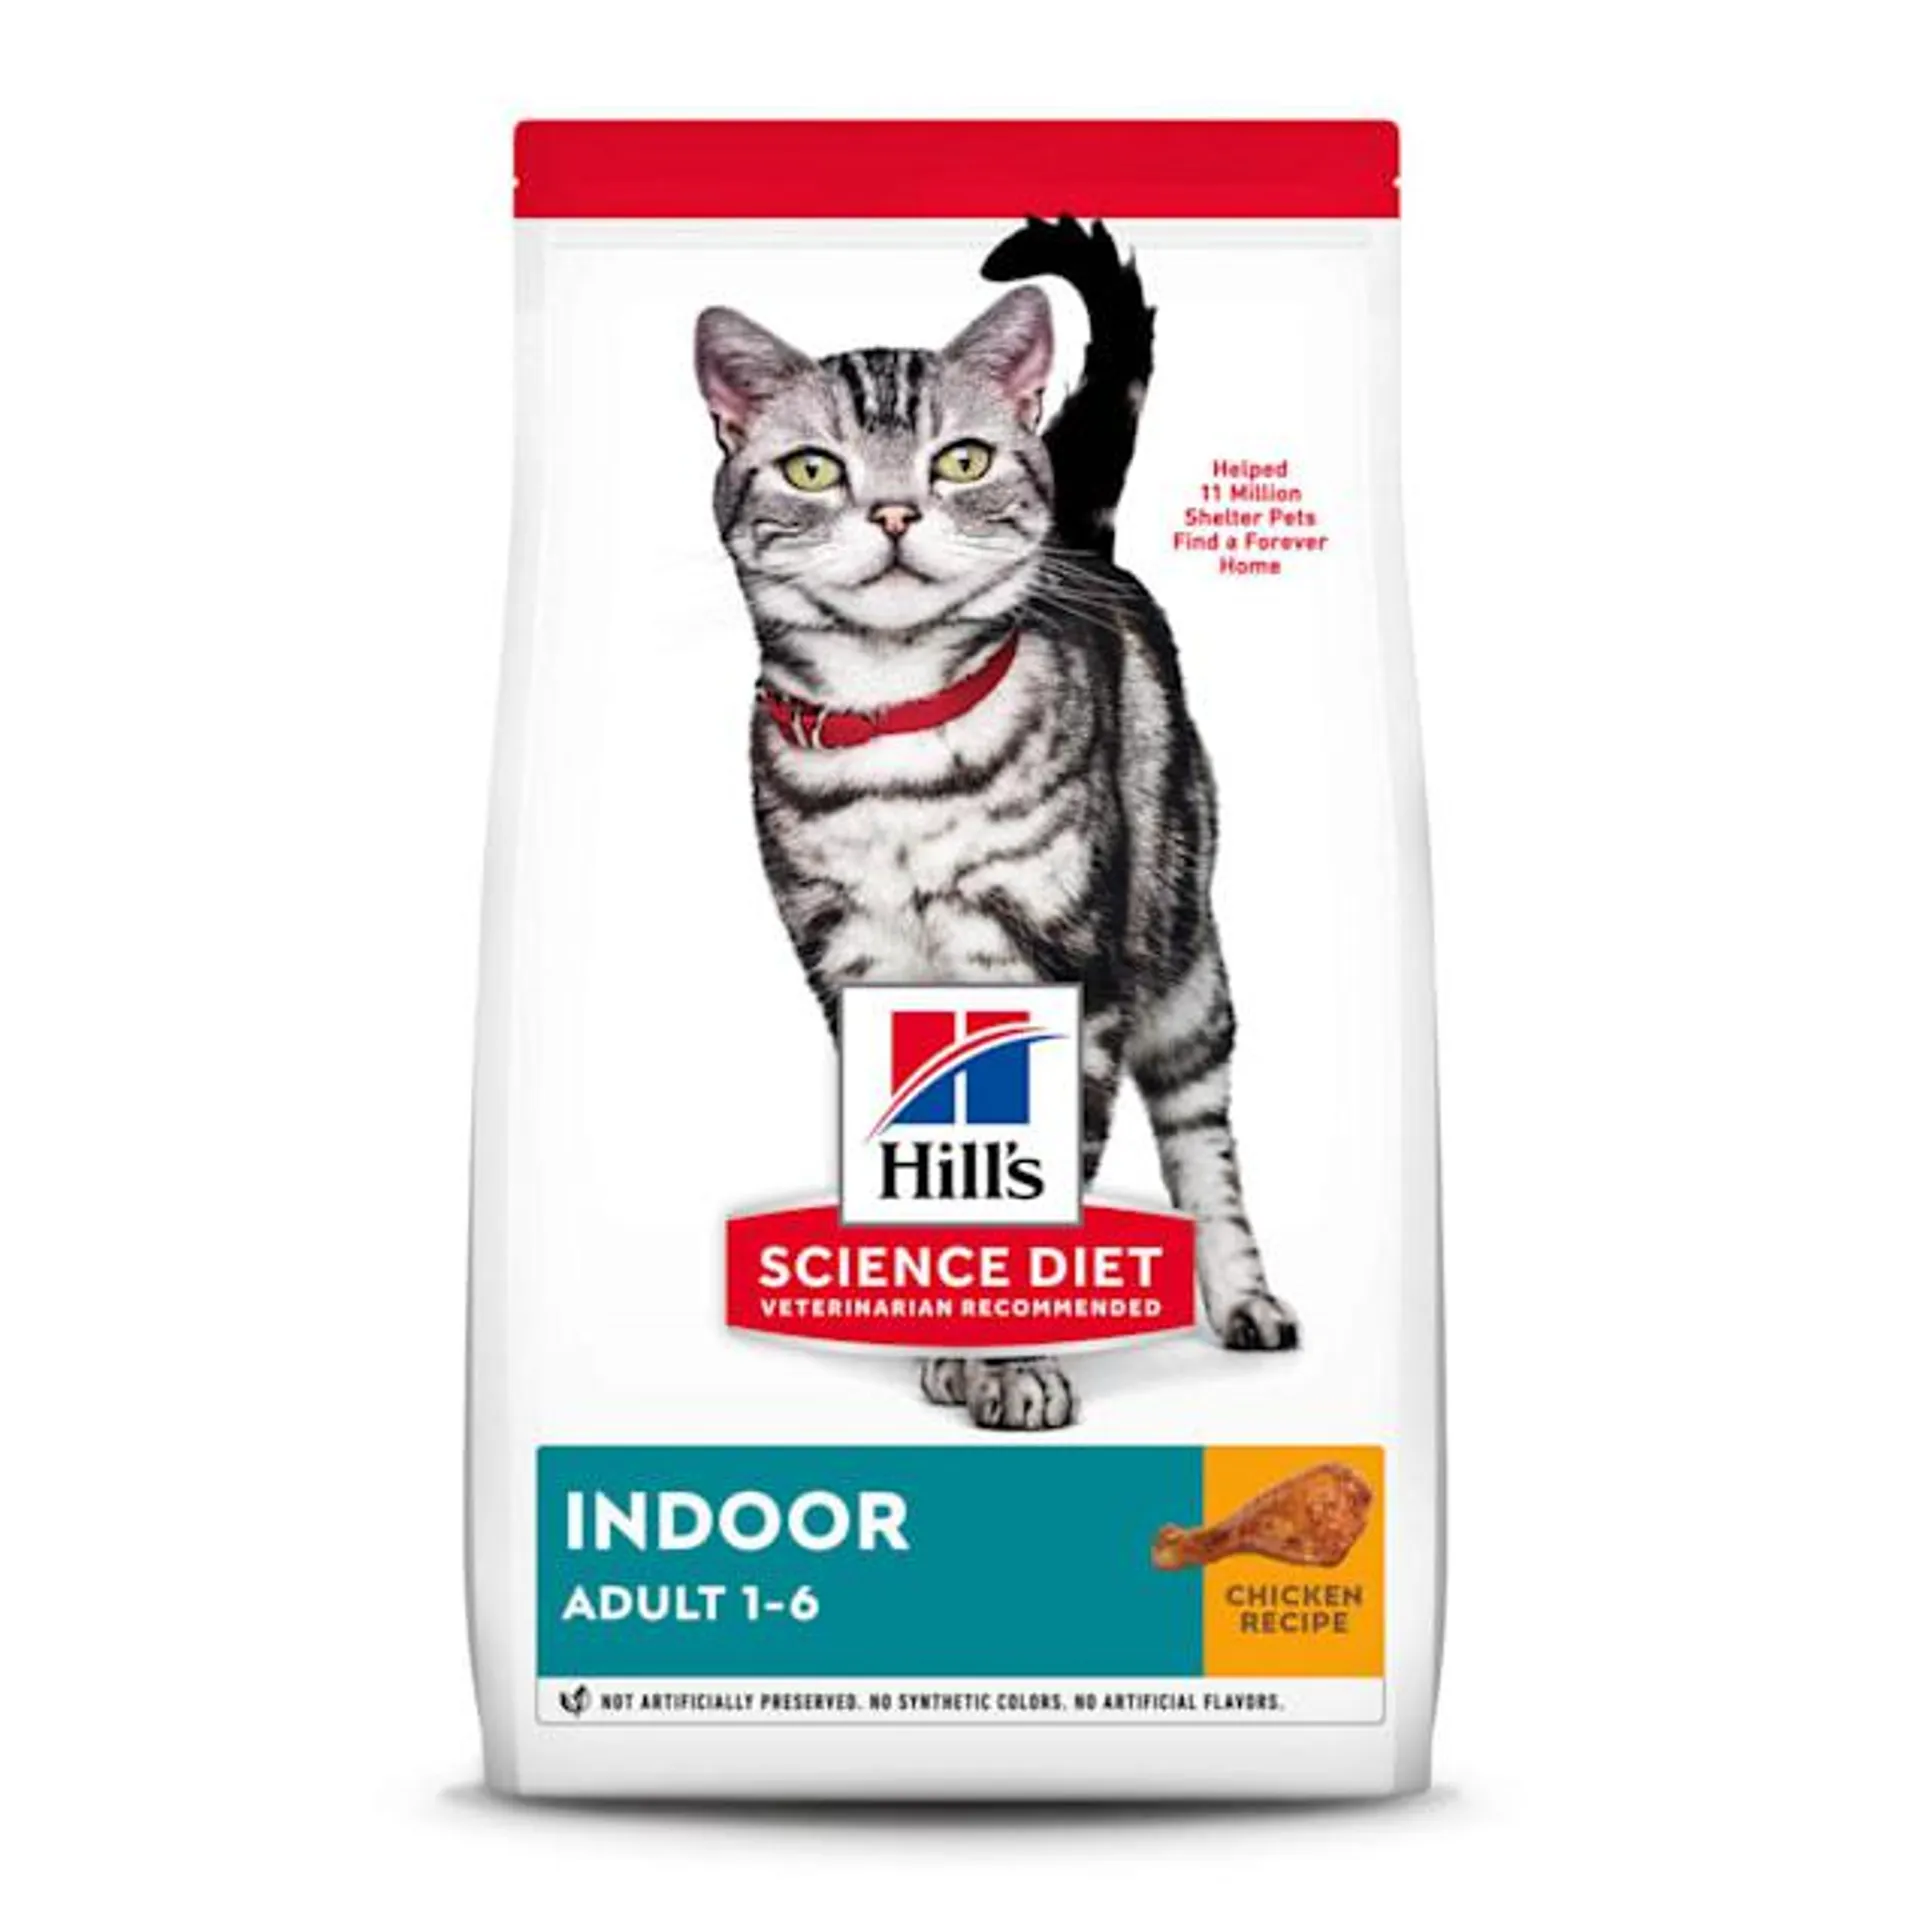 Hill's Science Diet Adult Indoor Chicken Recipe Dry Cat Food, 15.5 lbs.